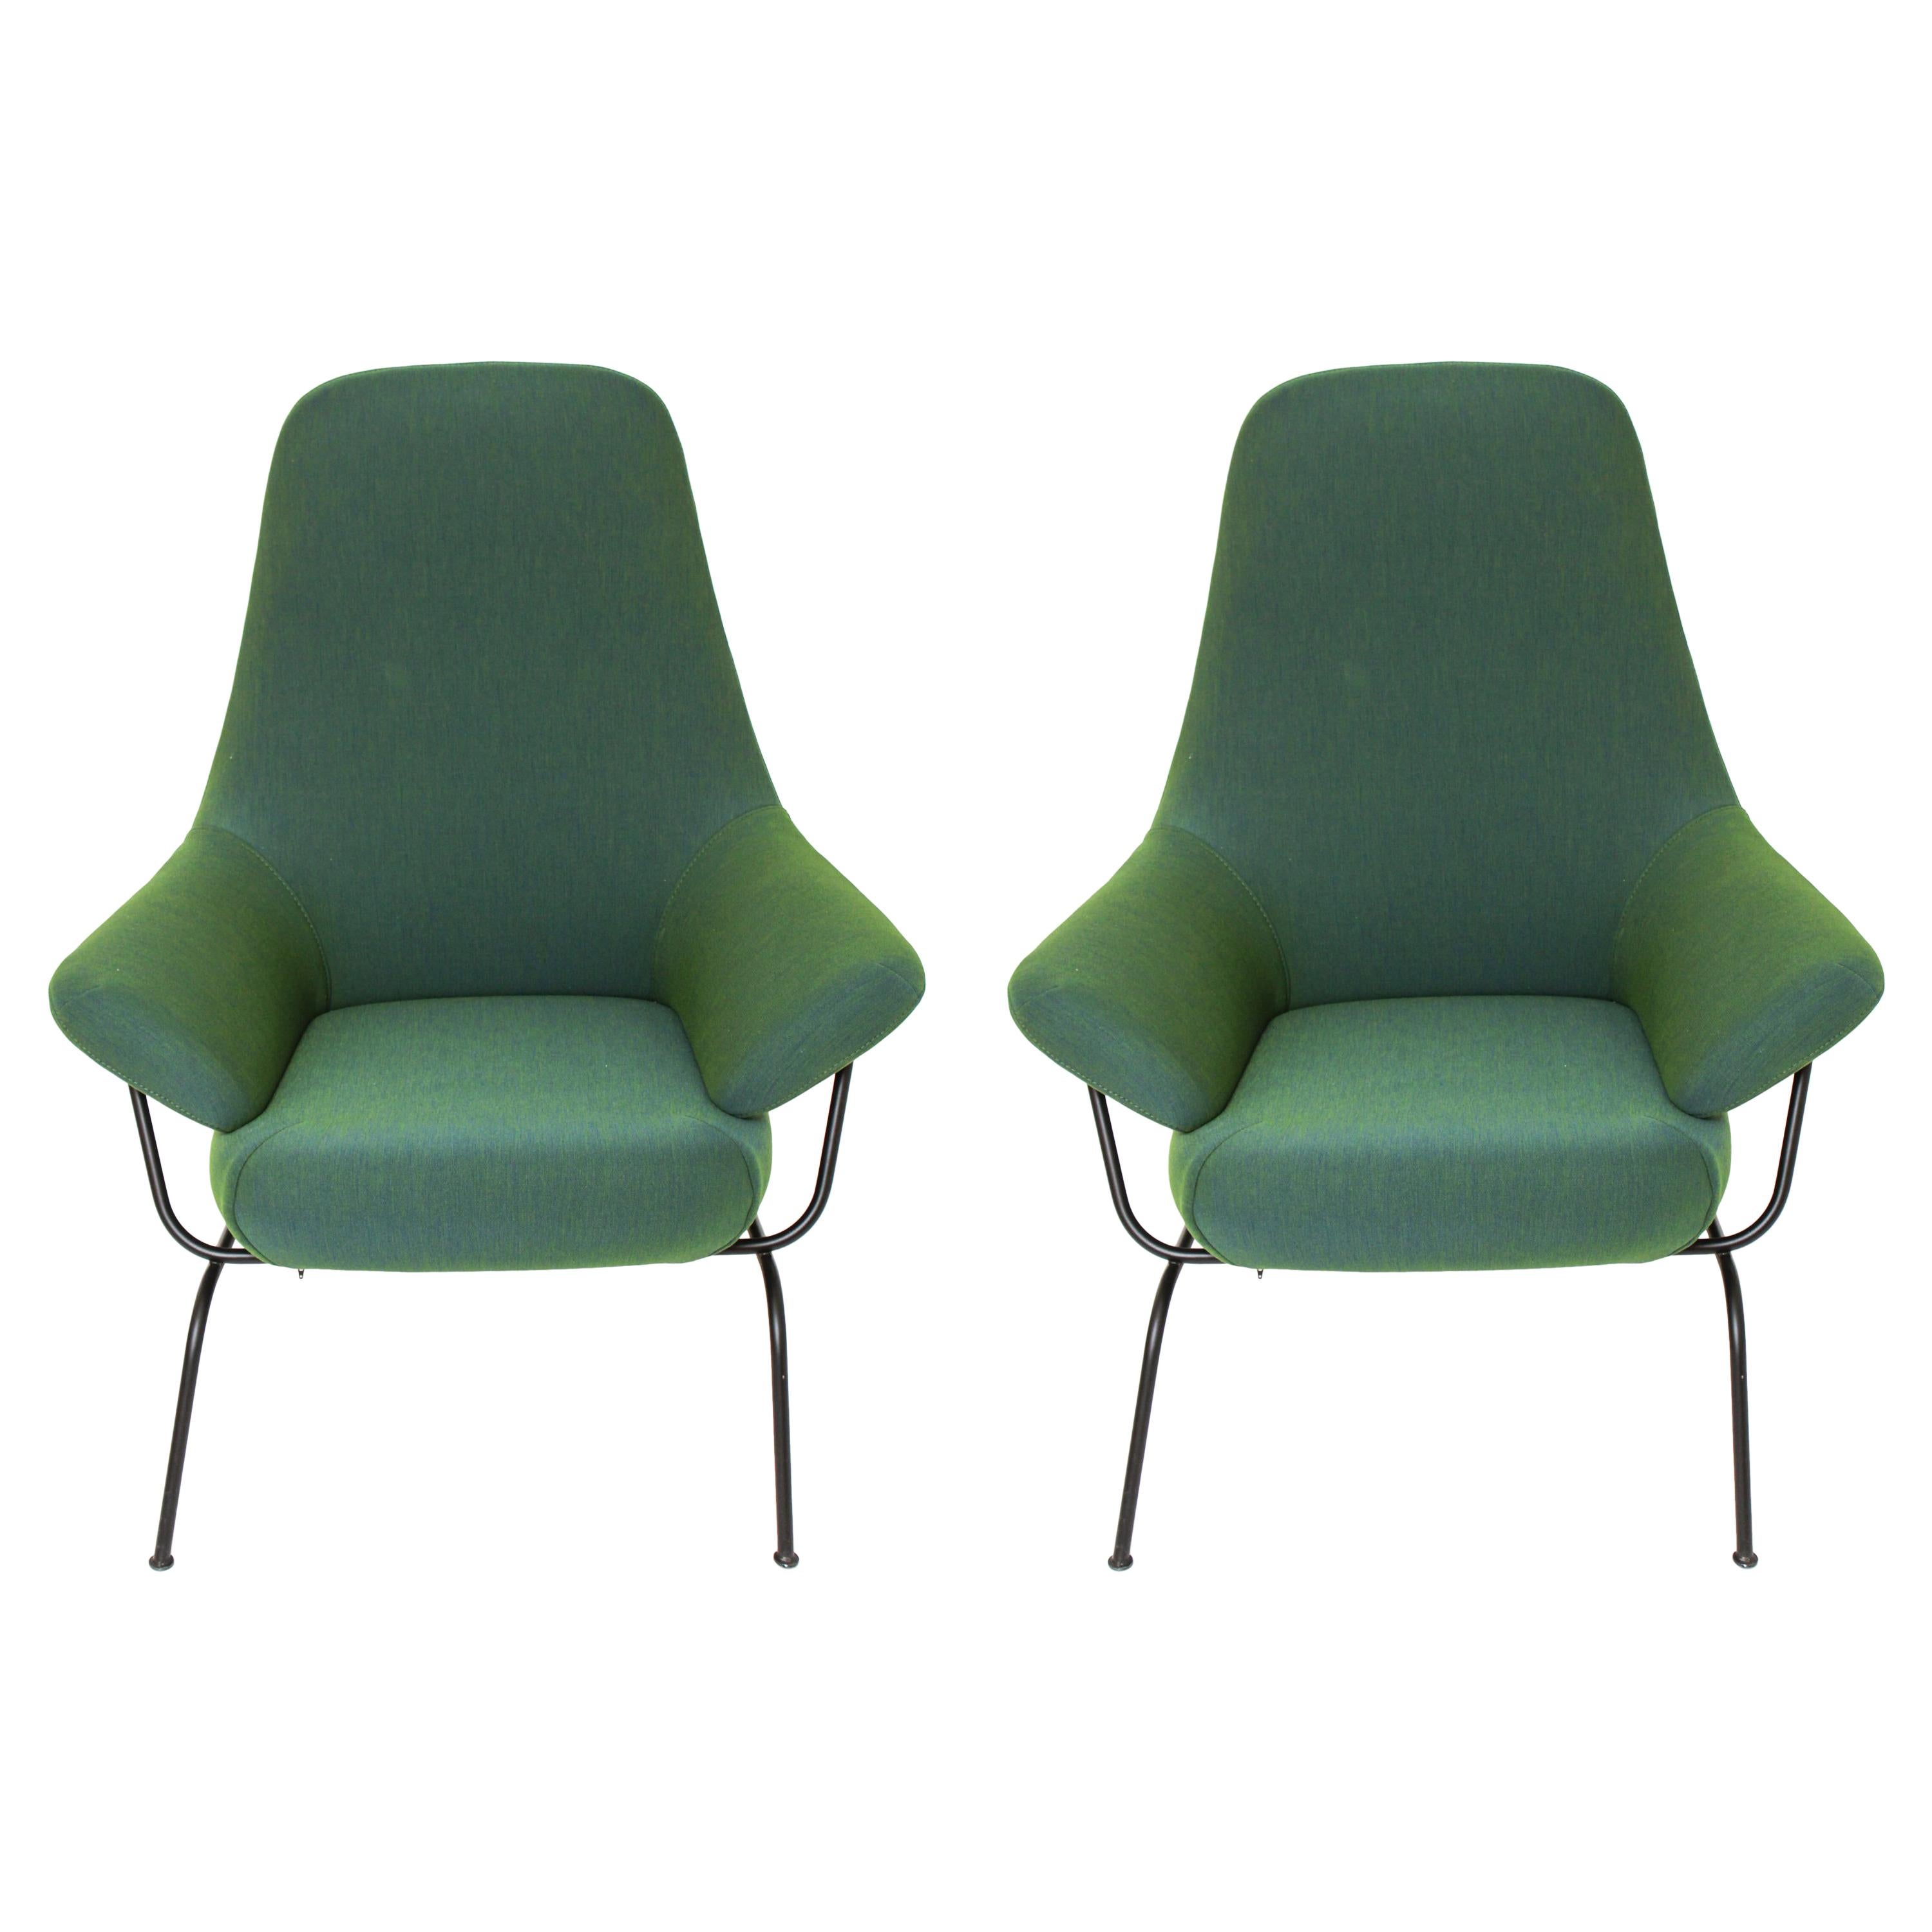 Luca Nichetto for Hem Modern "Hai" Green Accent Chairs